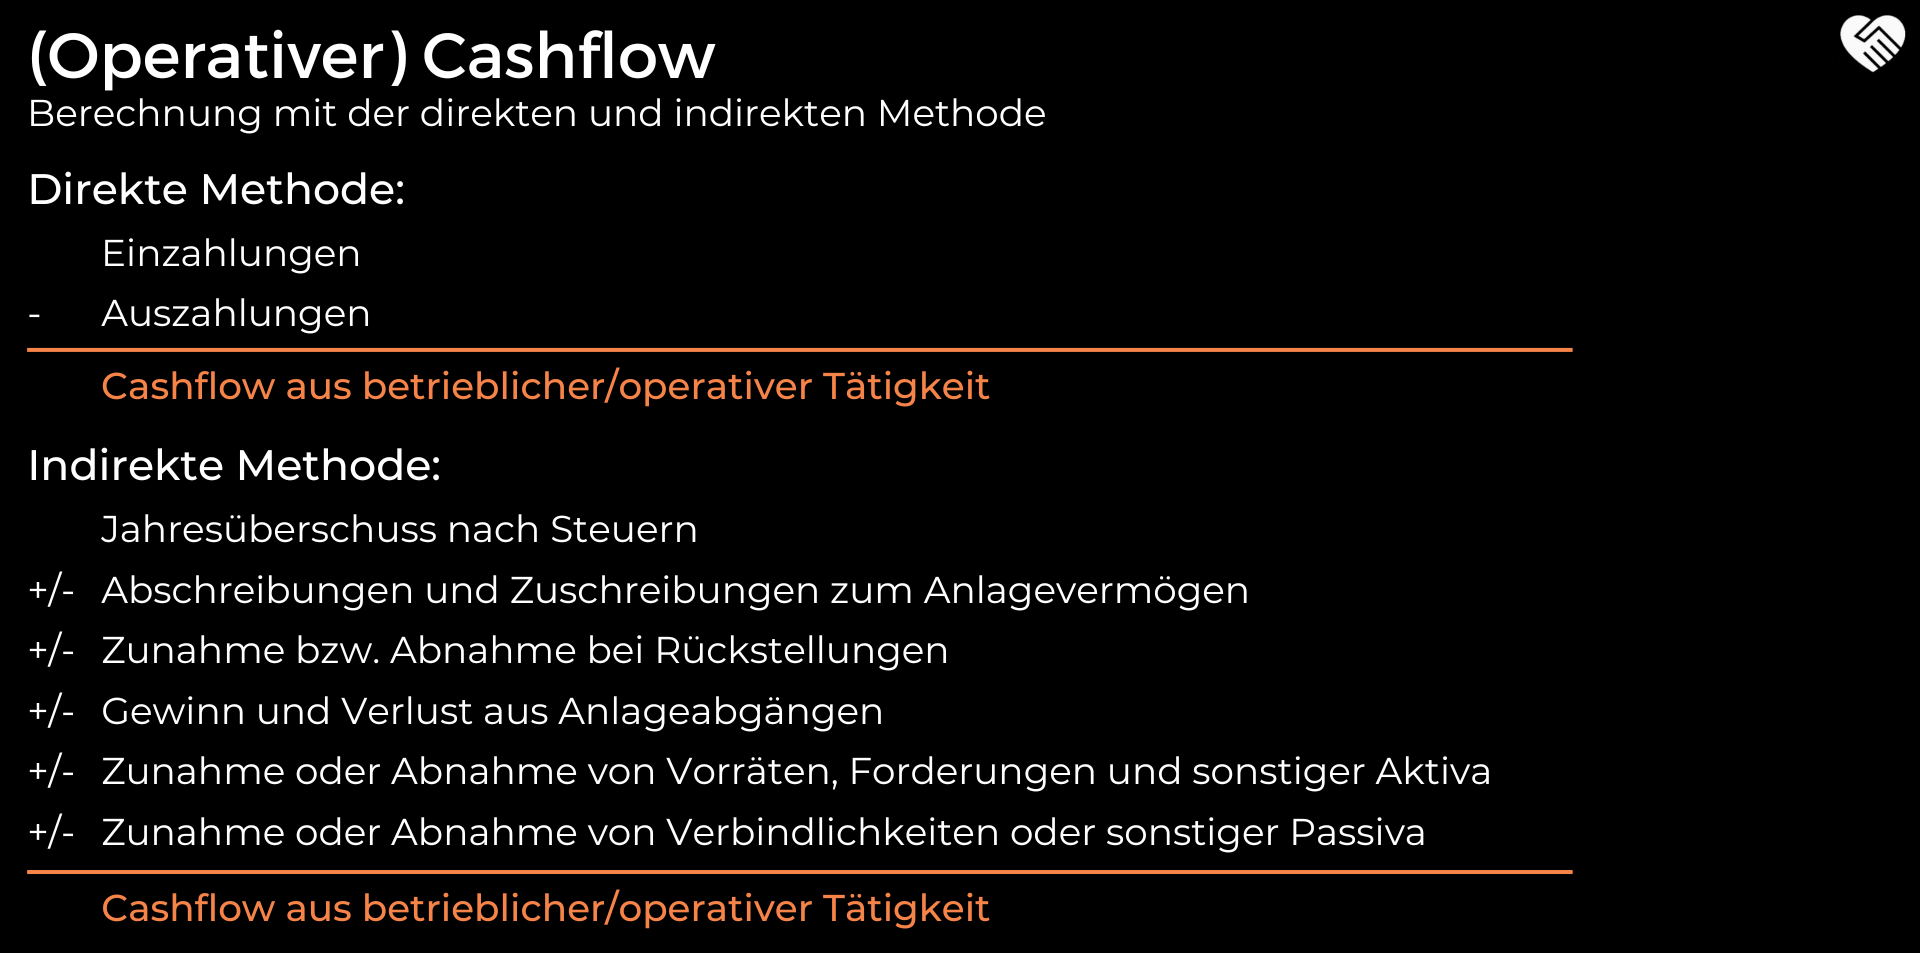 Operativer Cashflow